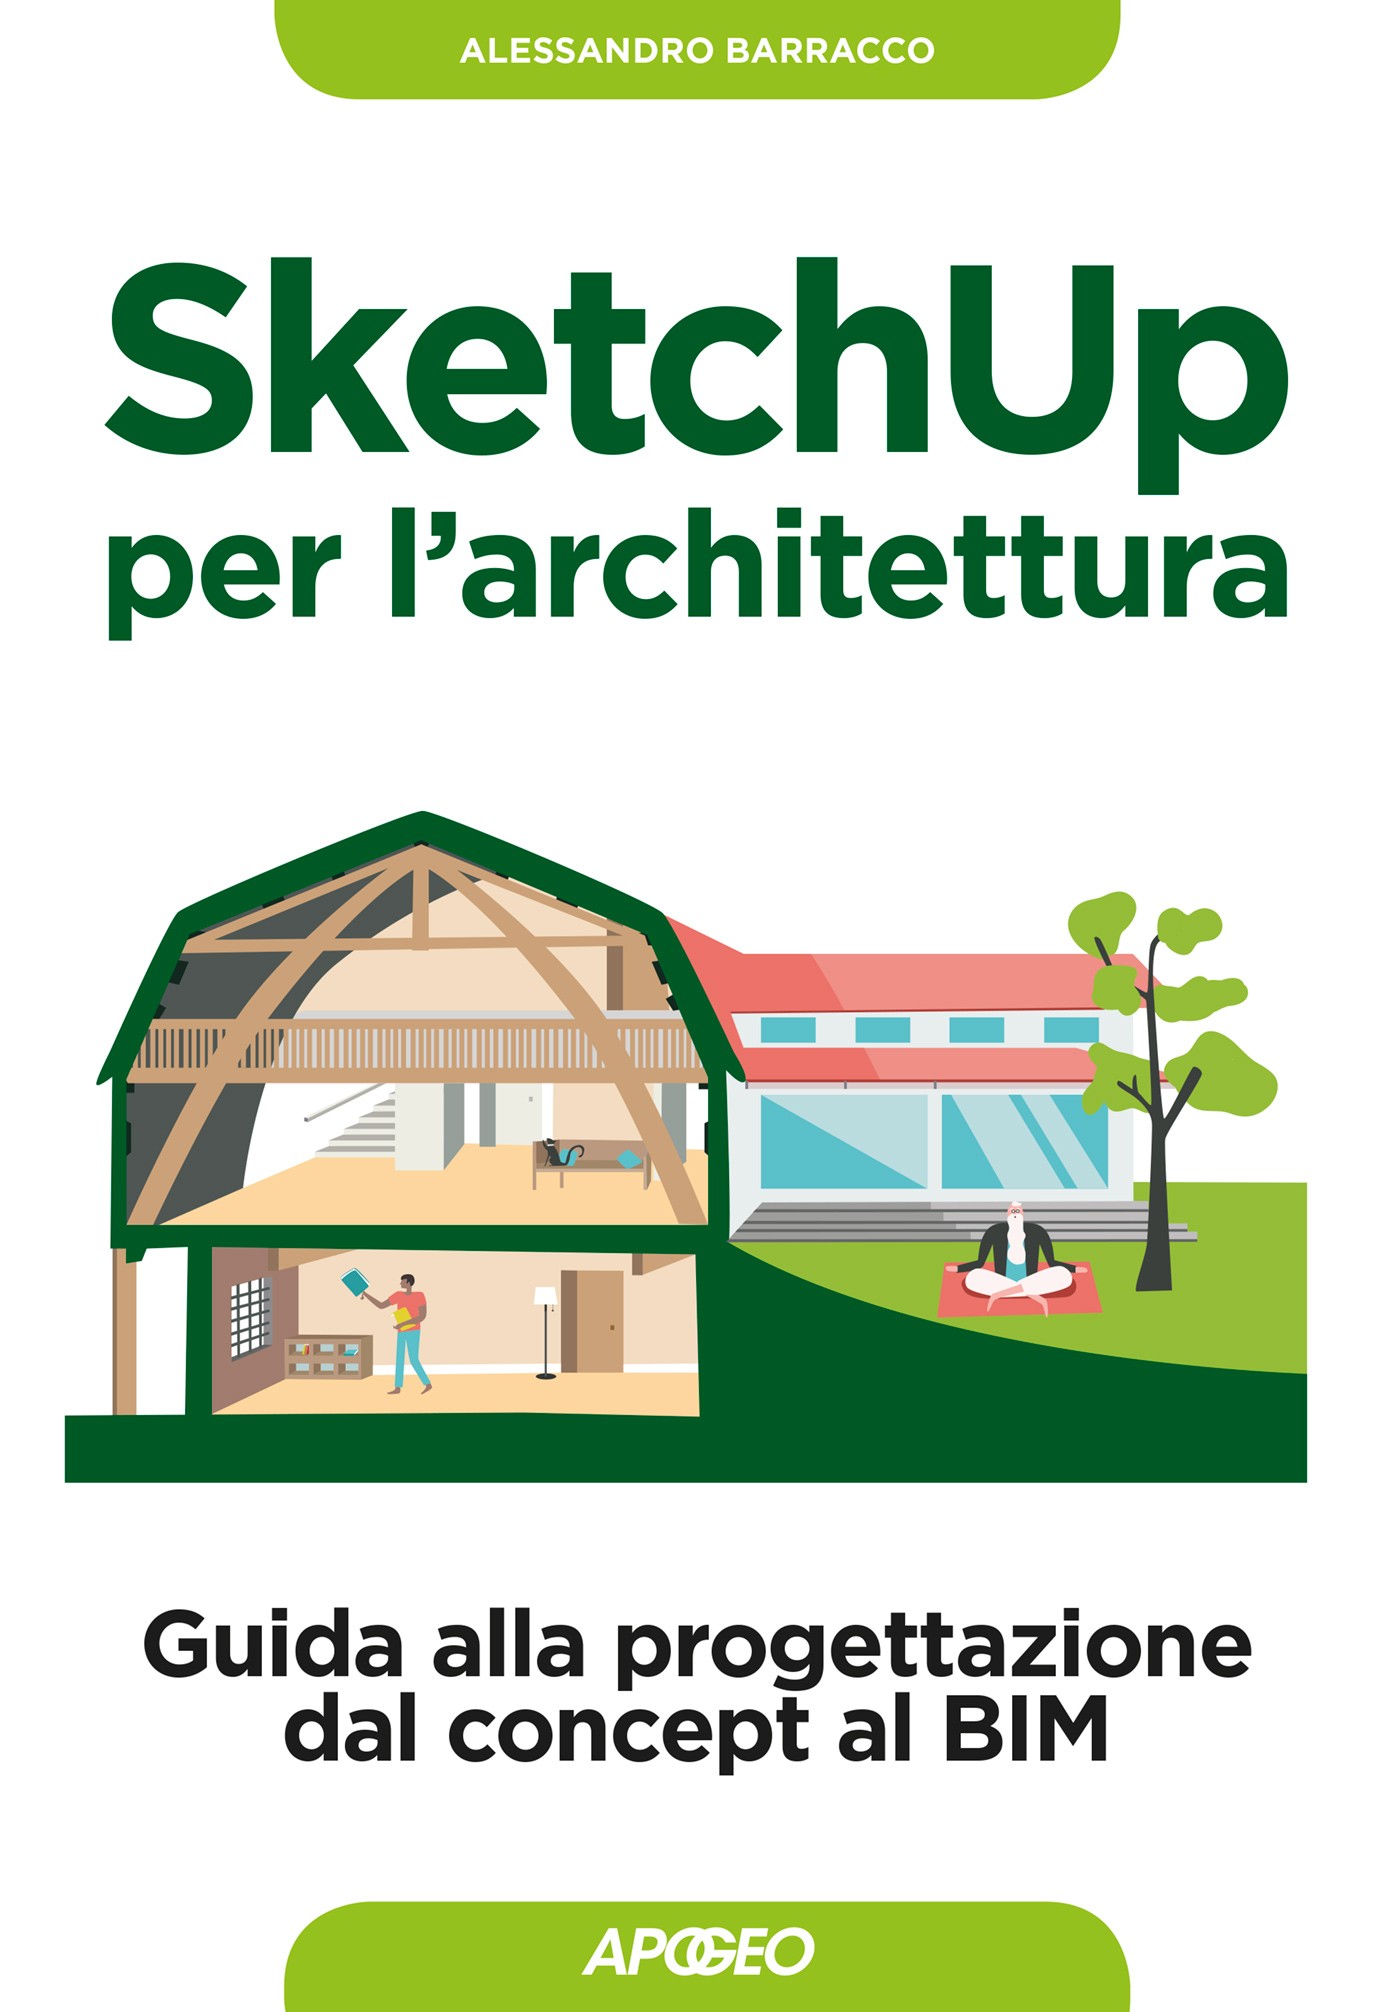 SketchUp per l'architettura - Librerie.coop